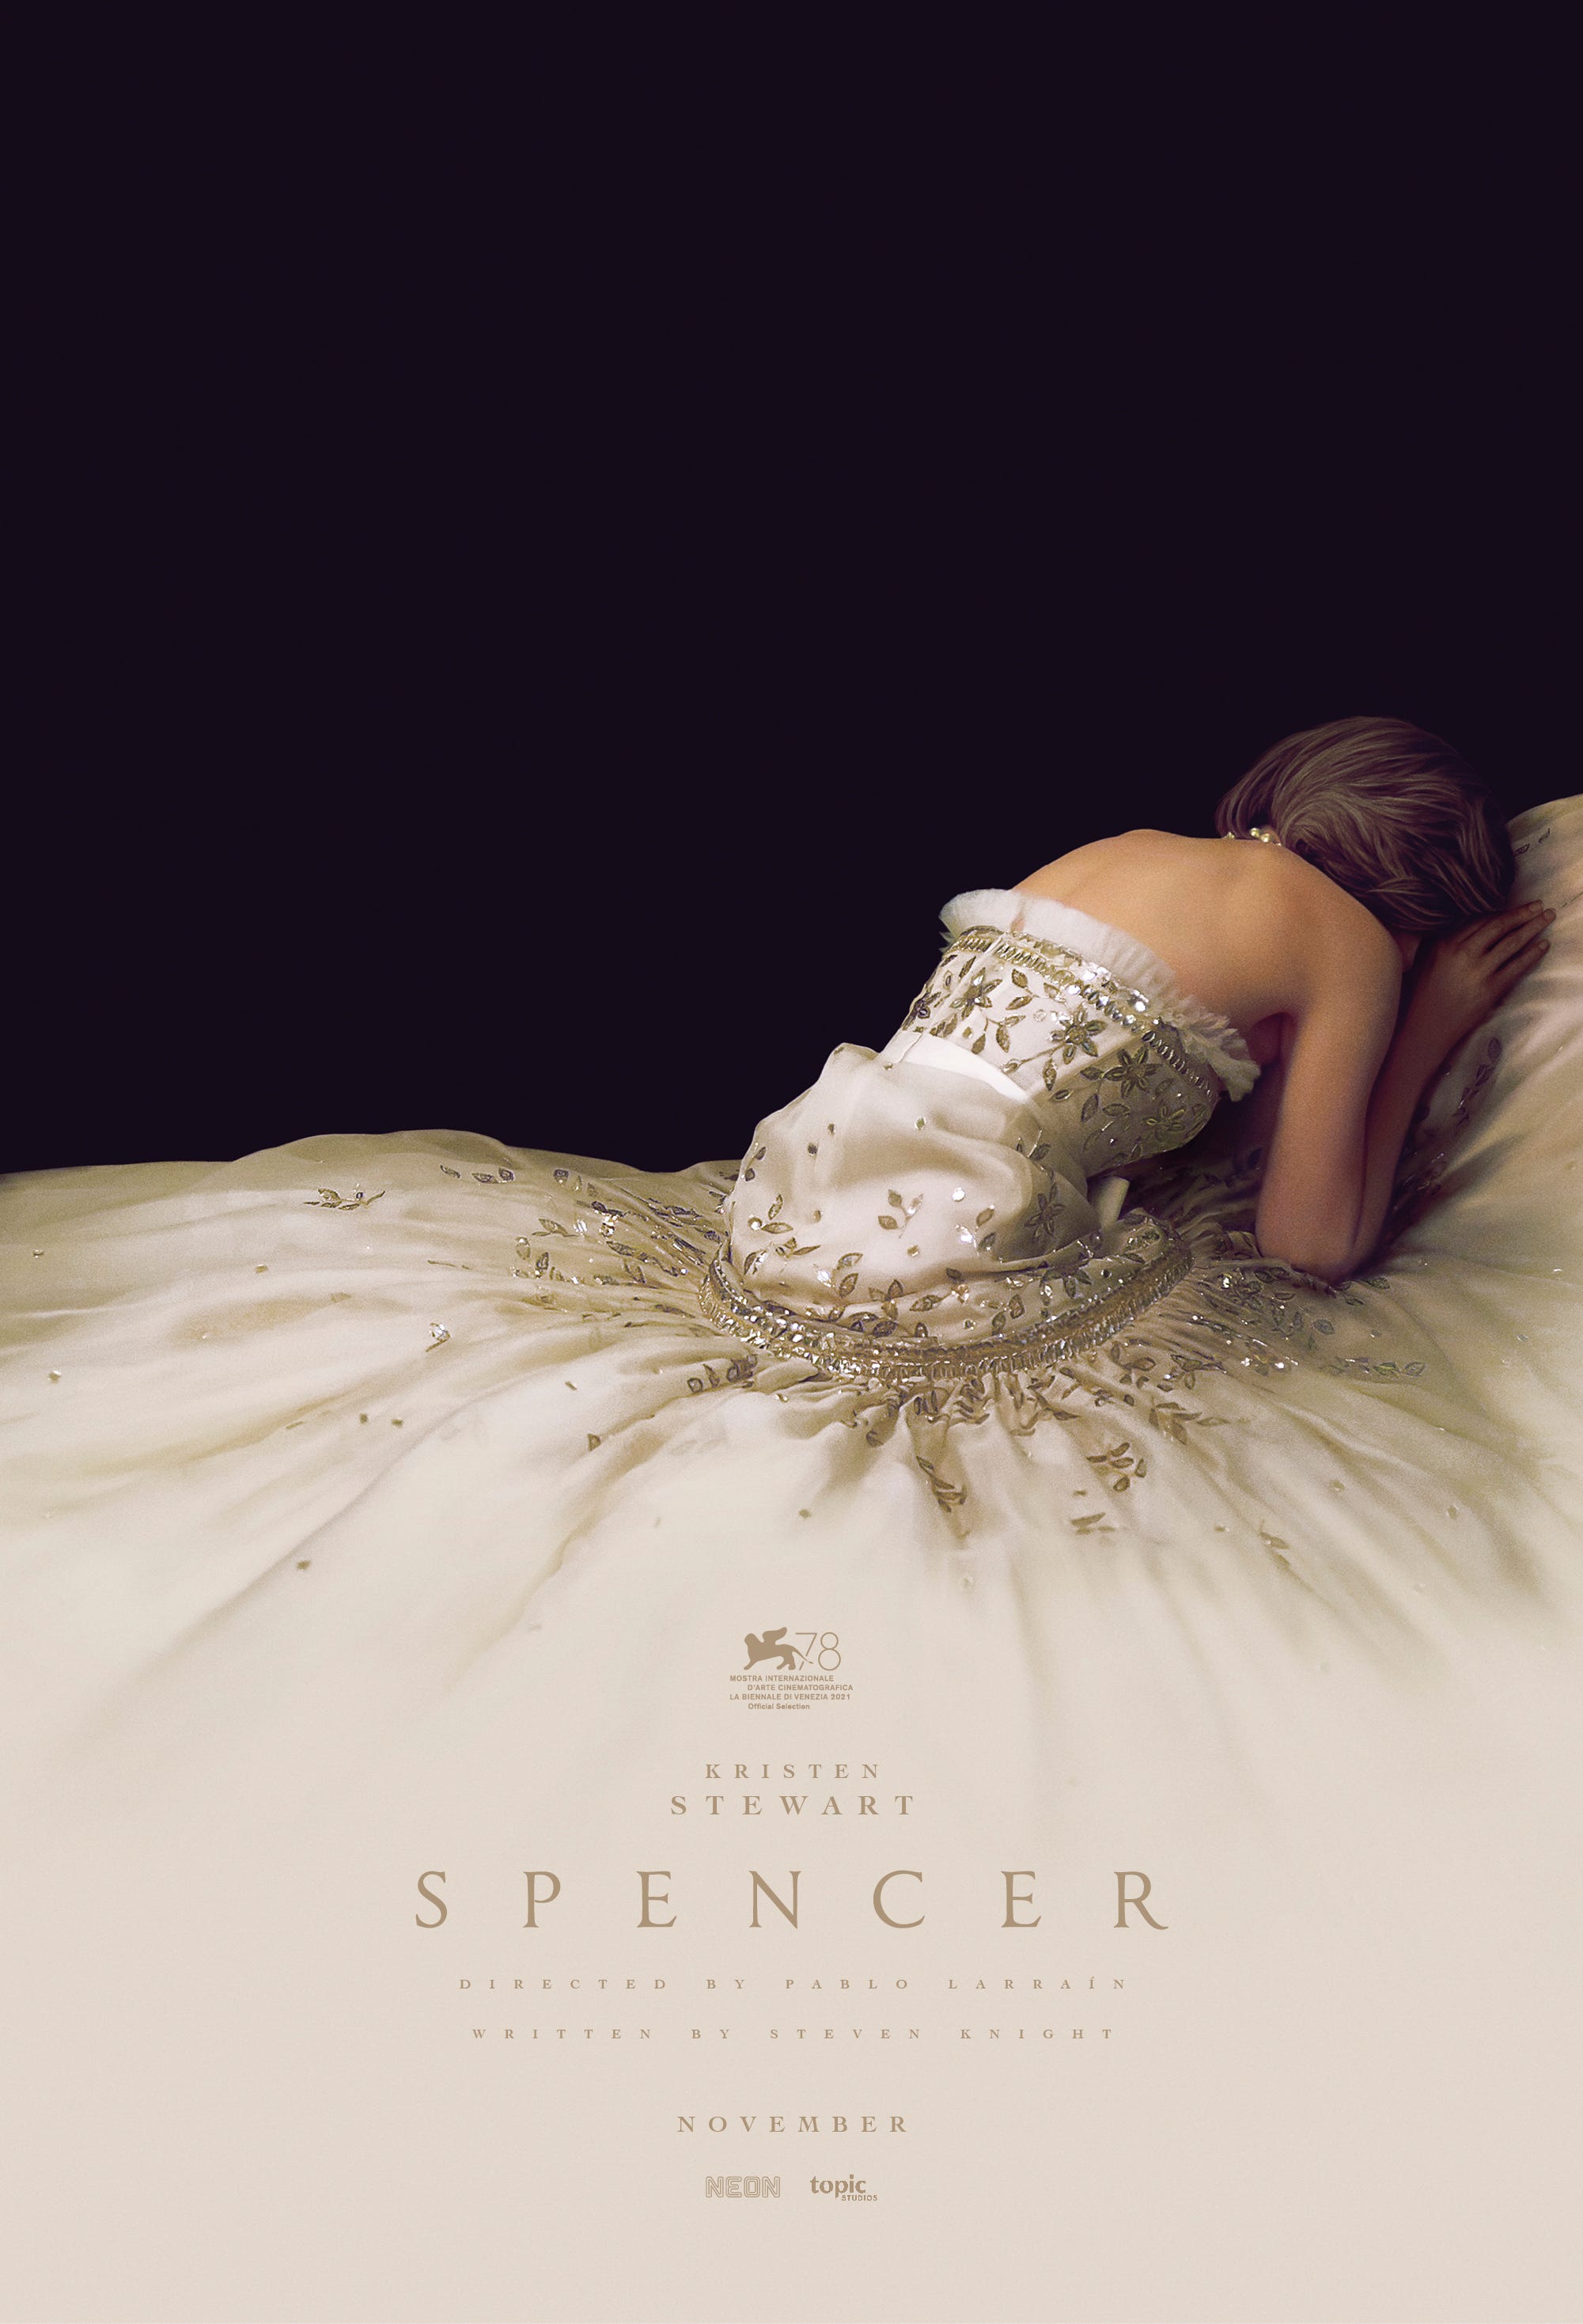 Spencer' trailer: Kristen Stewart's Princess Diana confronts Charles